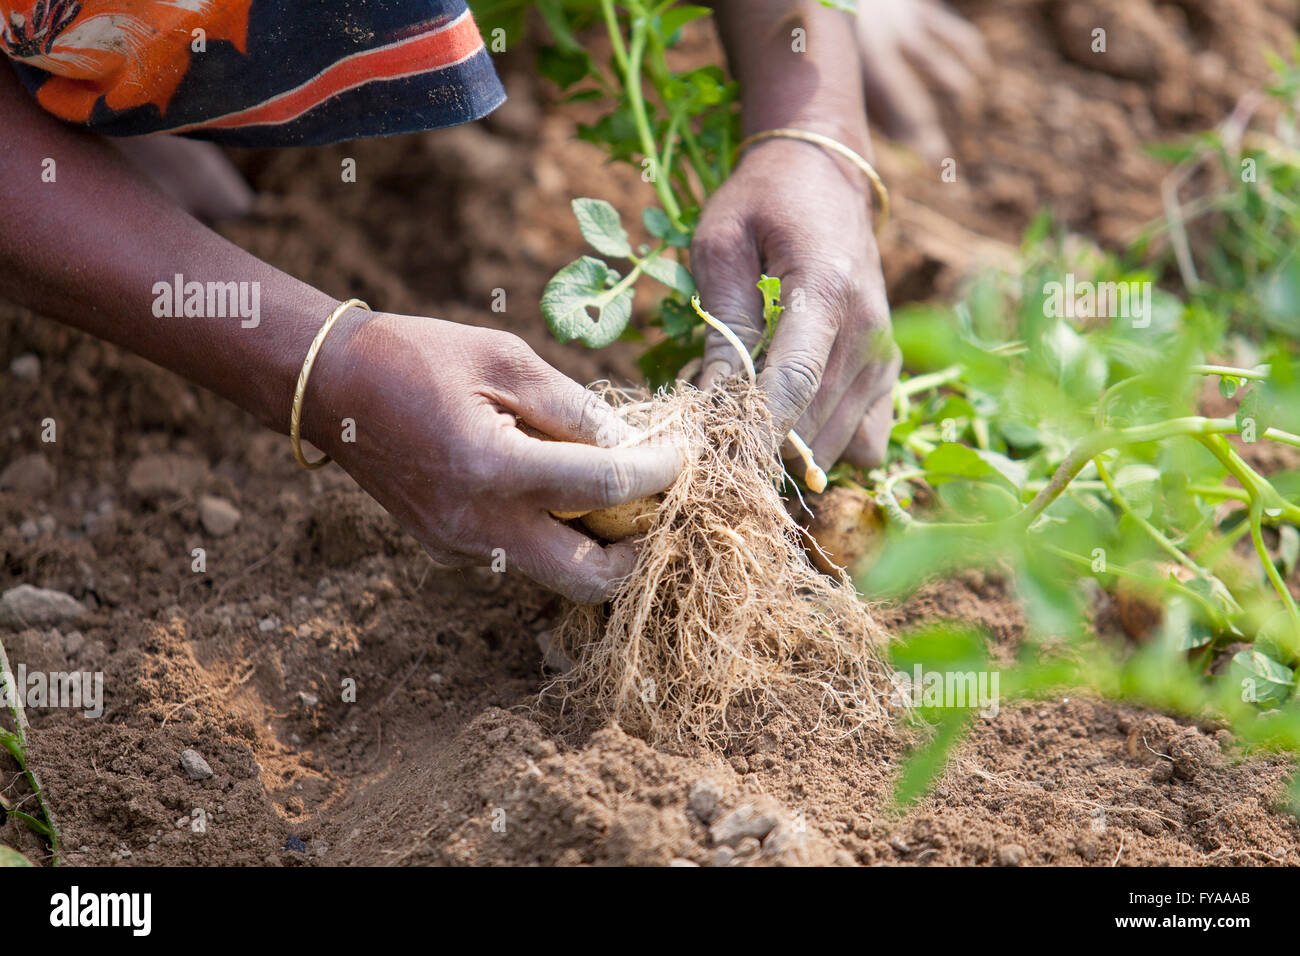 Thakurgong, Bangladesh Potato Field Workers © Jahangir Alam Onuchcha/Alamy Stock Photo